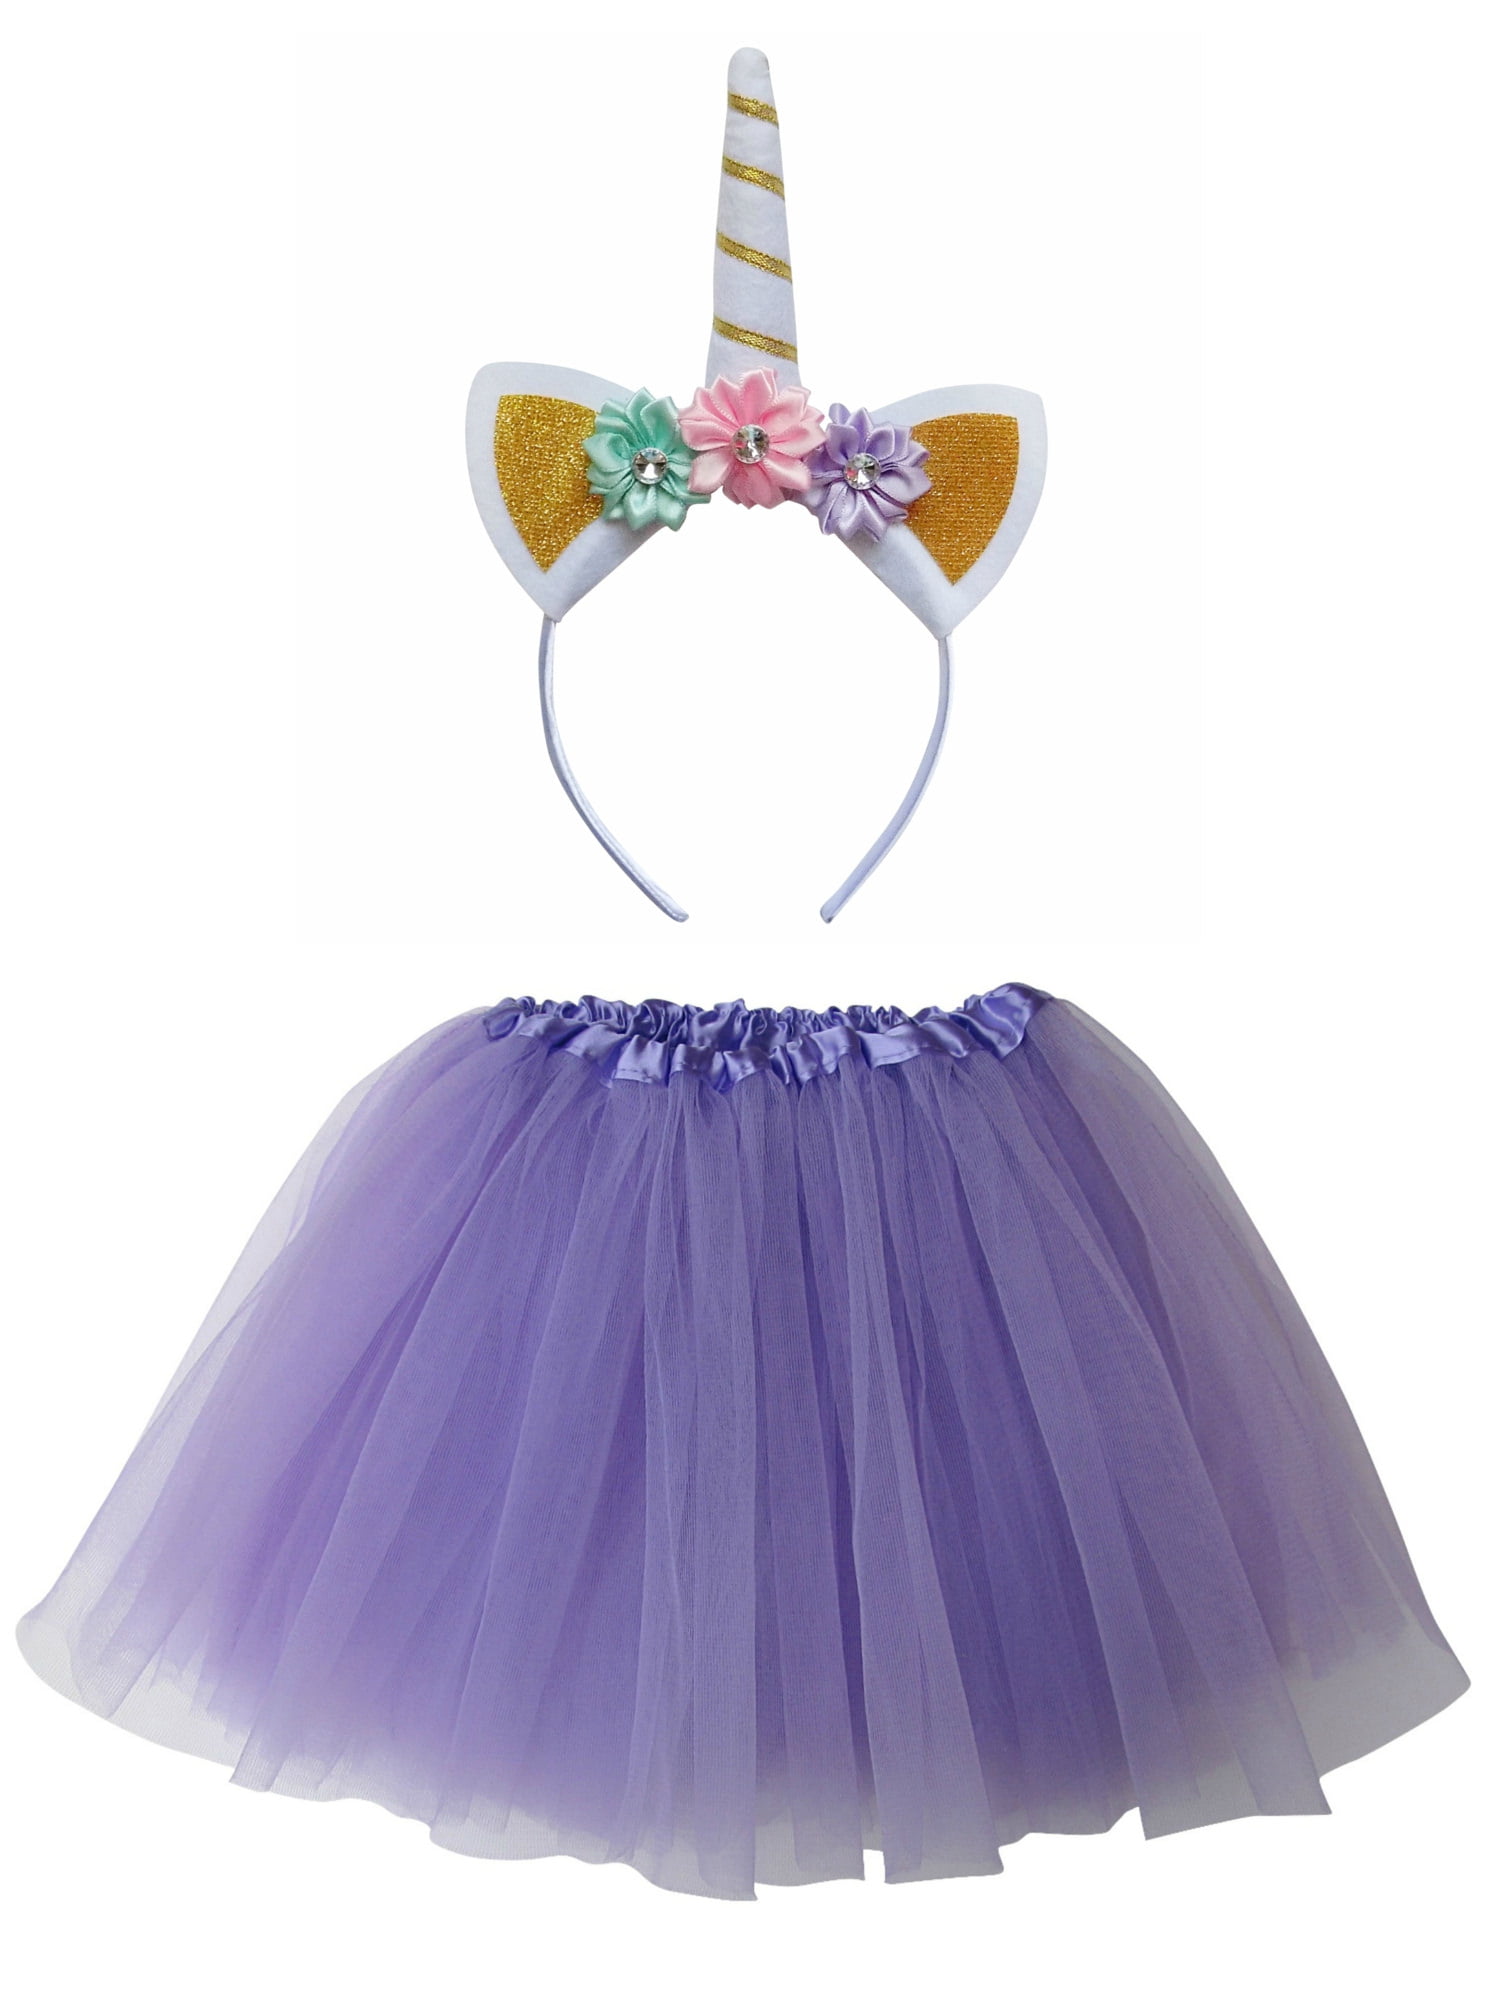 2020 Girls Unicorn Dress Party Costume Fancy Outfit Tutu Rainbow Flower Headband